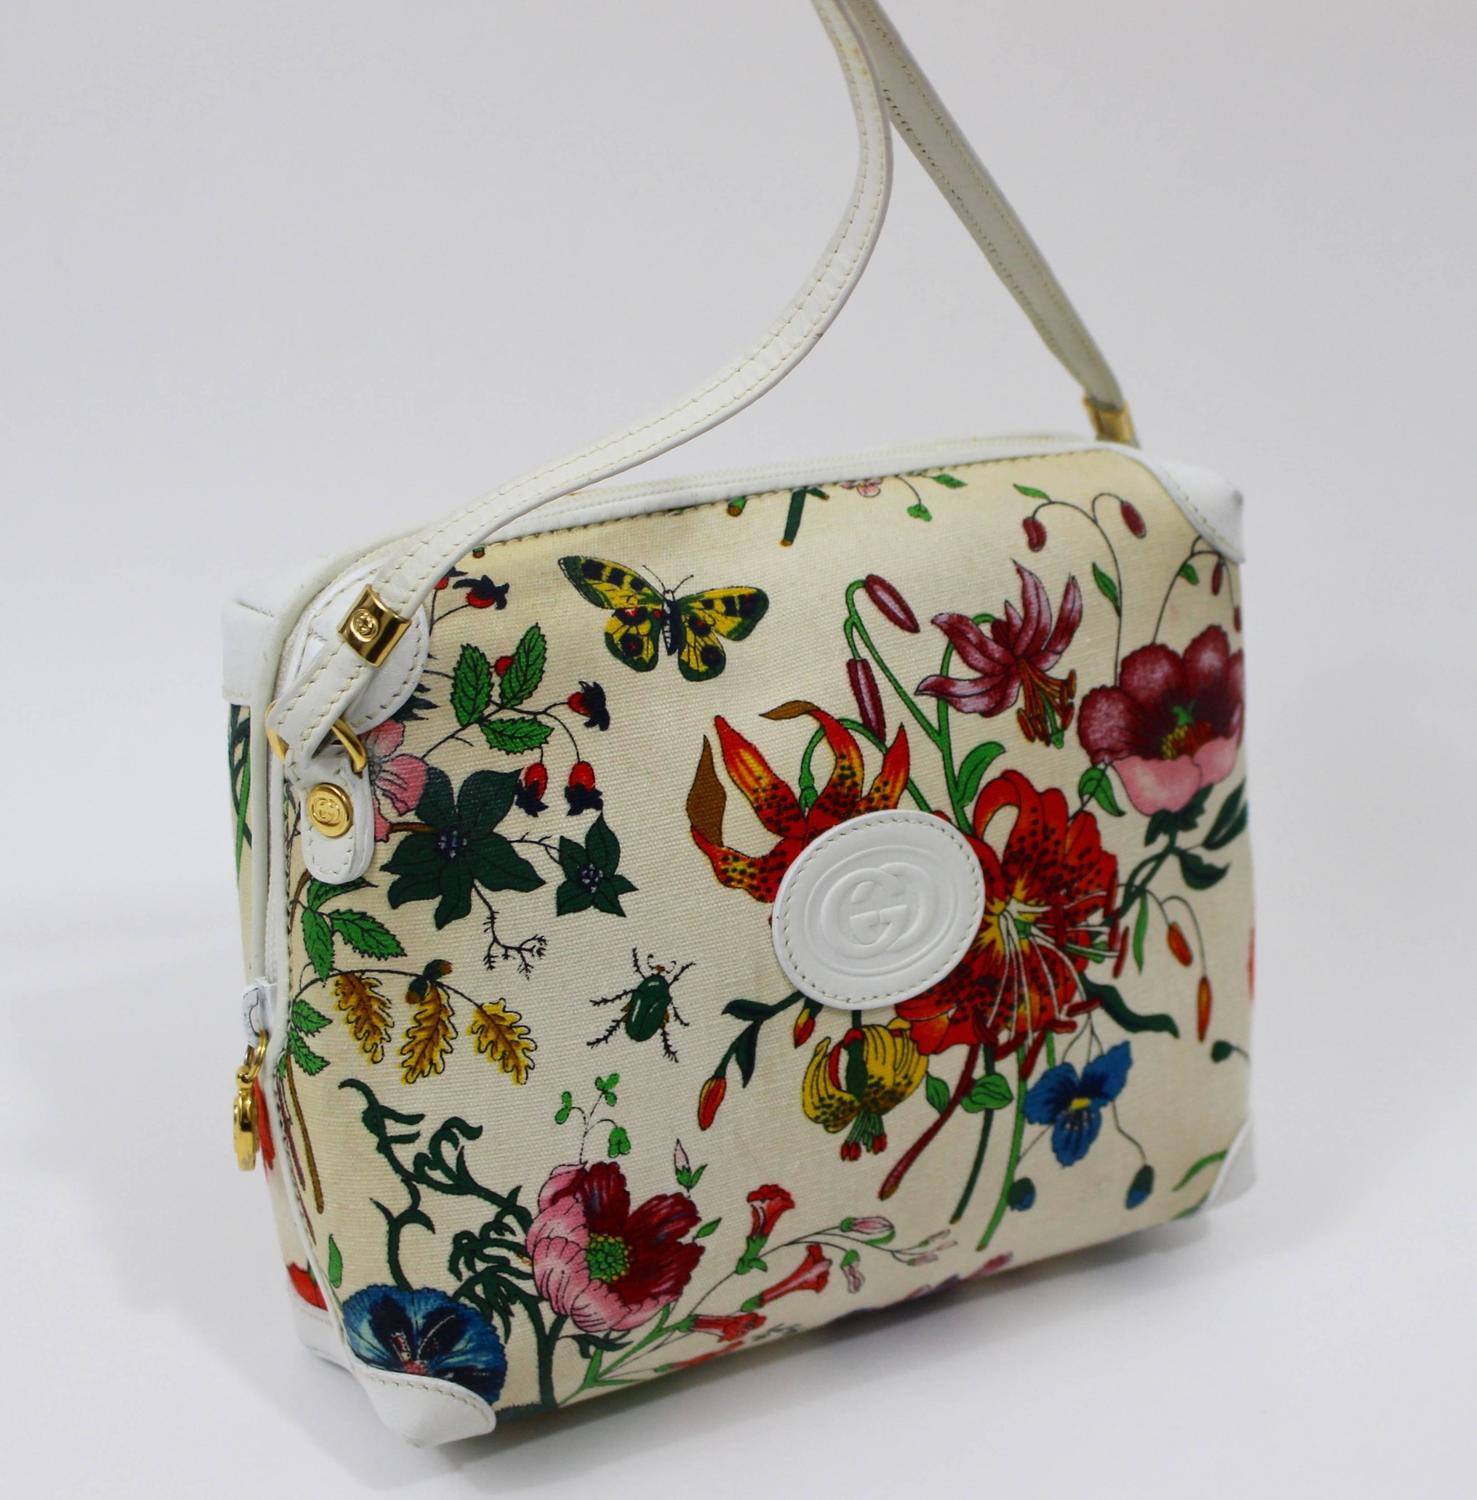 Vintage Gucci Floral Canvas White Leather Cross Body Shoulder Bag Purse For Sale at 1stdibs